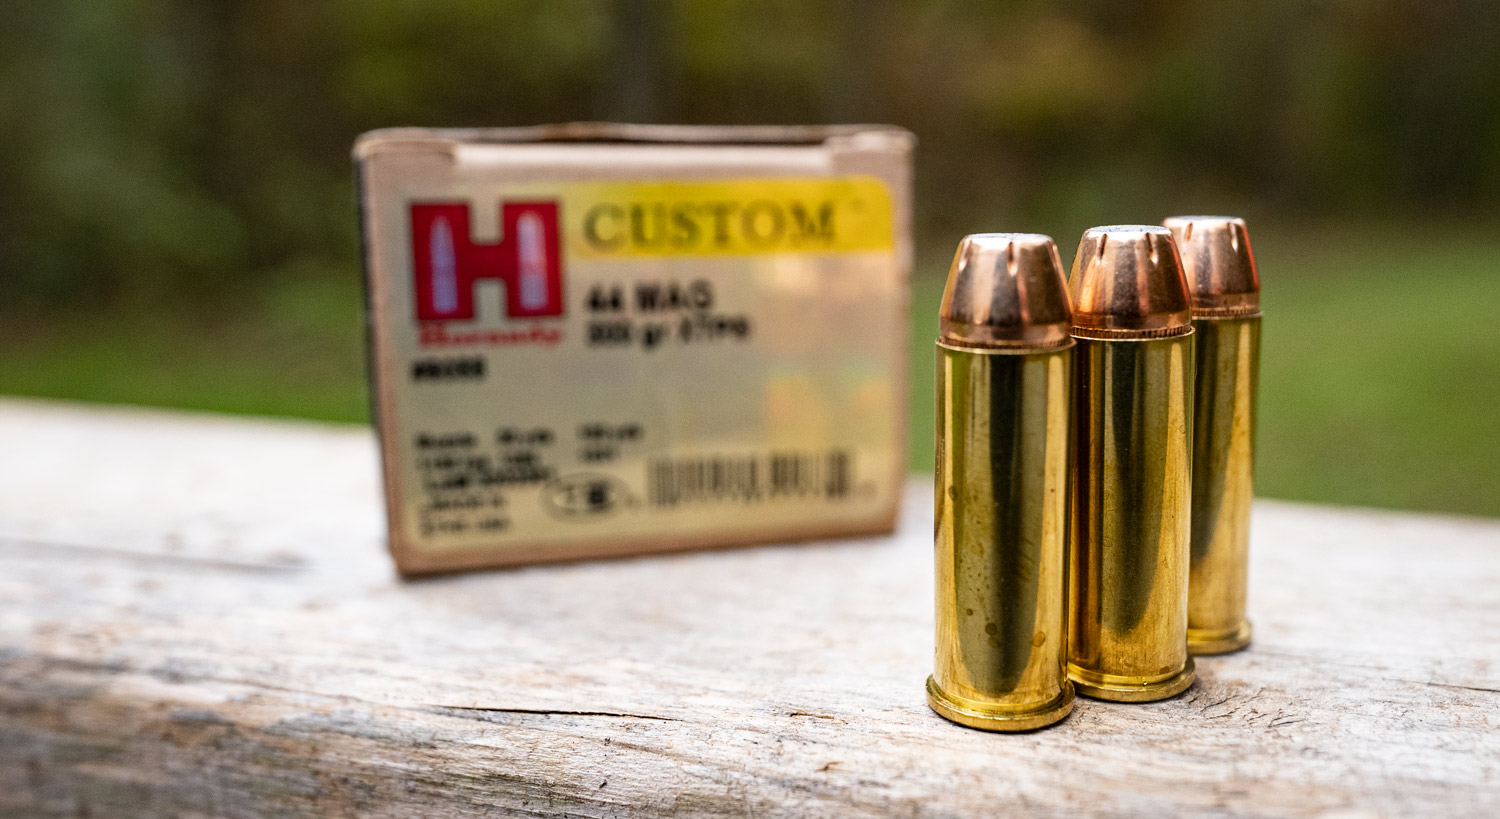 Hornady 44 Magnum ammo